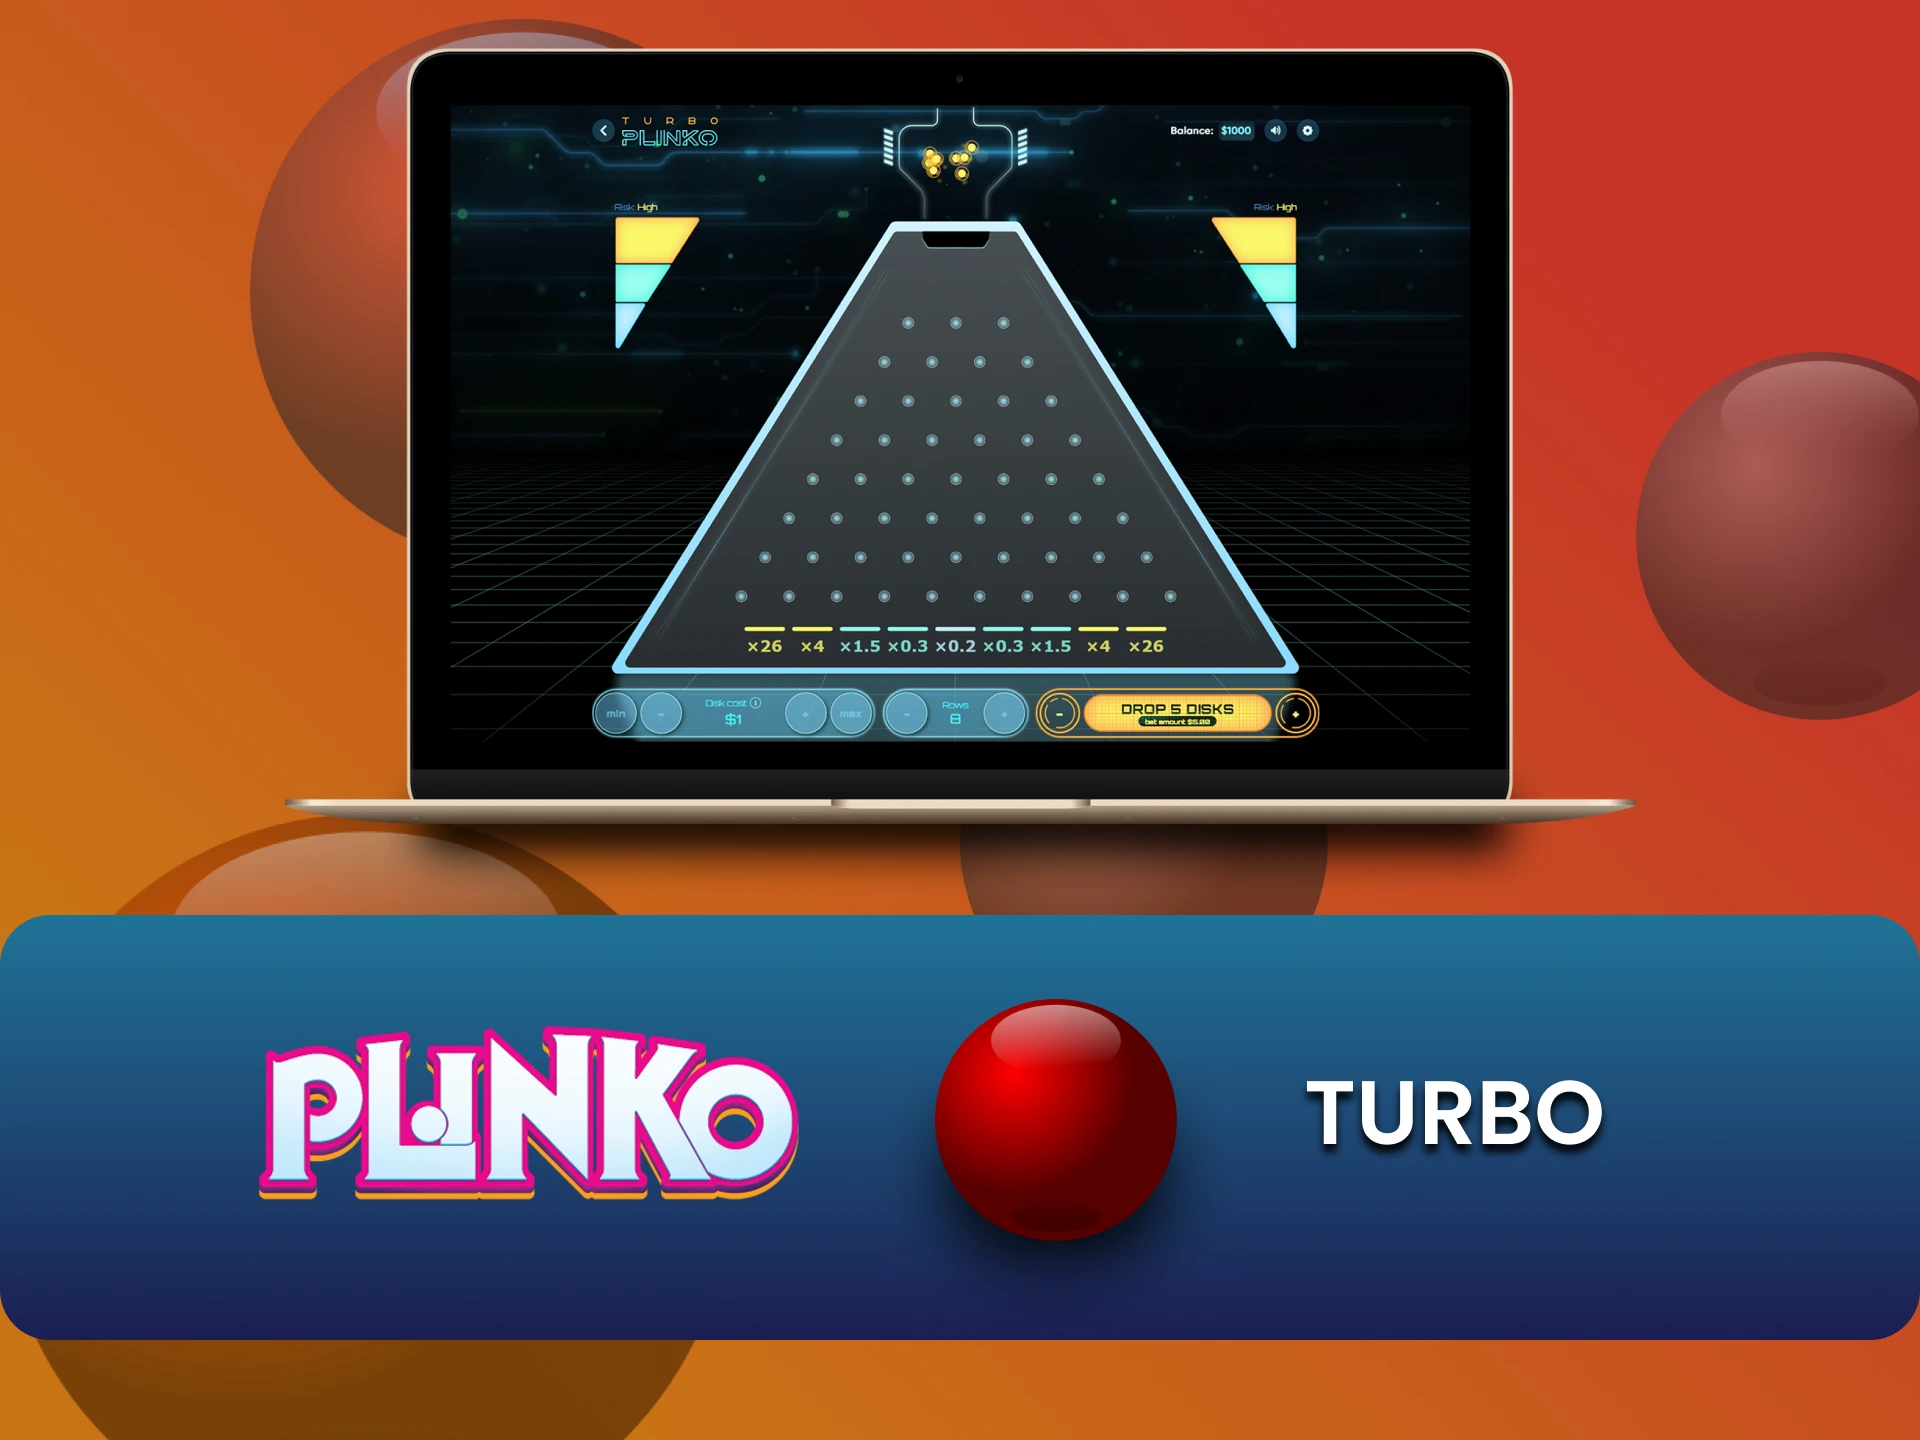 Choose Turbo Plinko to play.